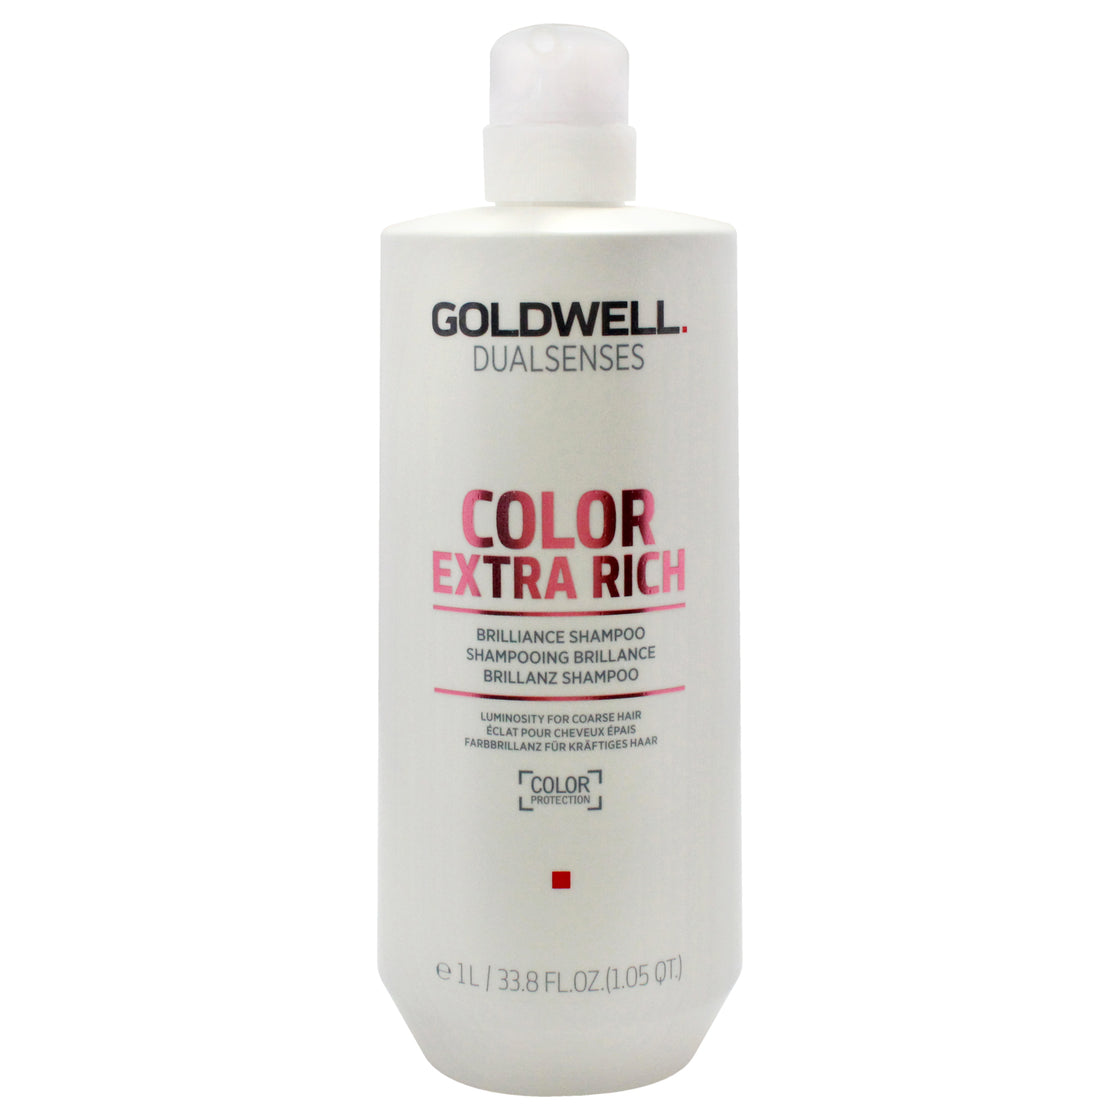 Dualsenses Color Extra Rich Shampoo by Goldwell for Unisex - 34 oz Shampoo